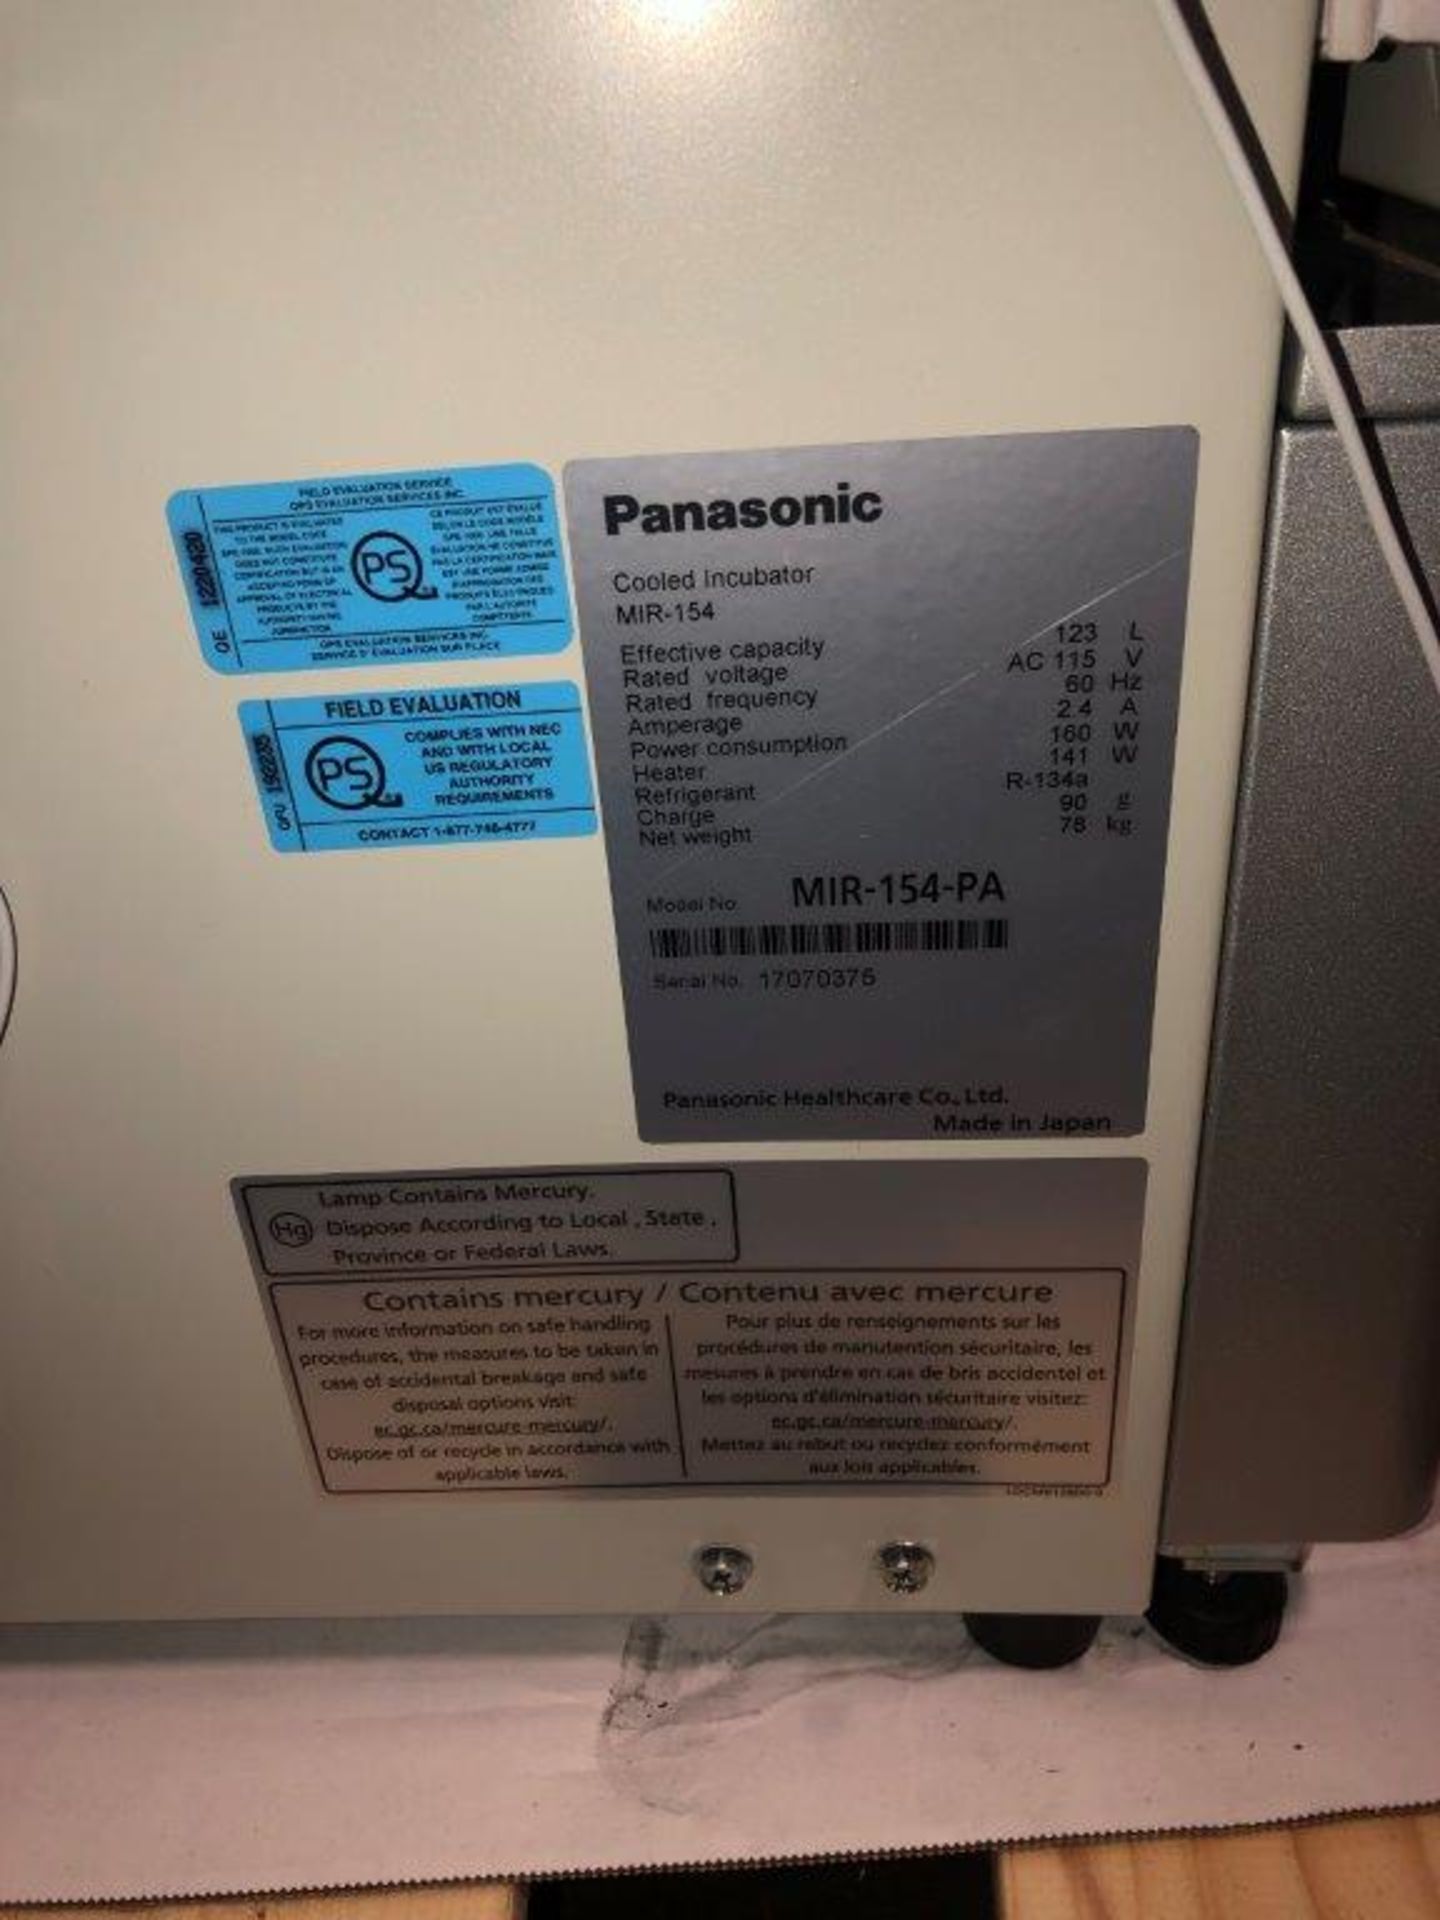 Panasonic MIR-154-PA Cool Incubator Stability Chamber, s/n 17070375, w 123 L Capacity - Image 4 of 4